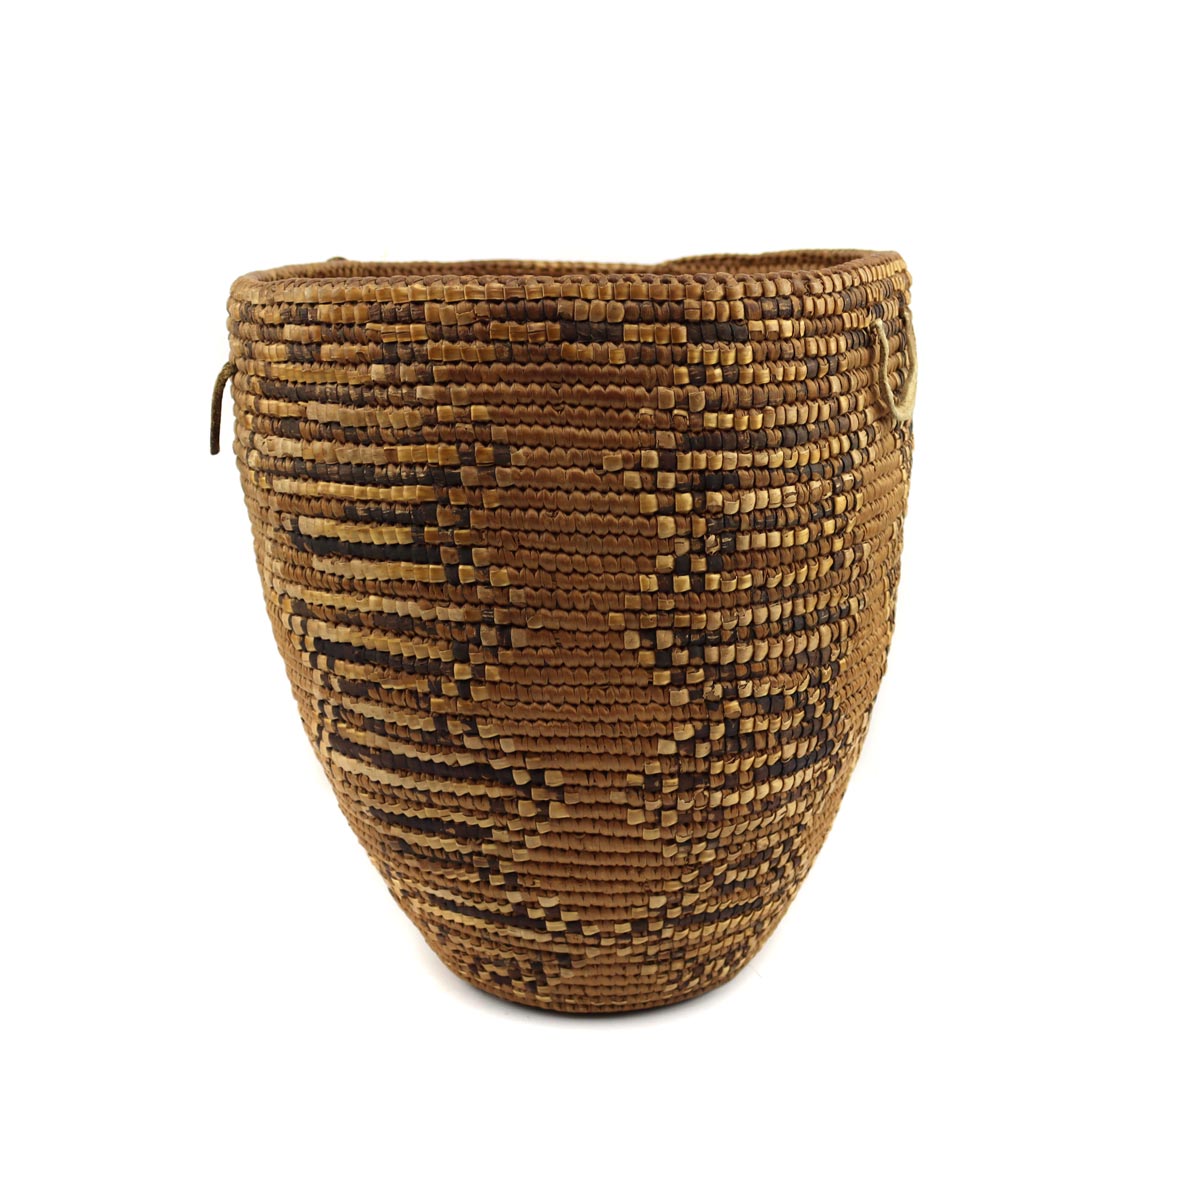 Salish Polychrome Burden Basket c. 1890s, 12" x 13.5" x 11.25" (SK92306-1222-001)3
